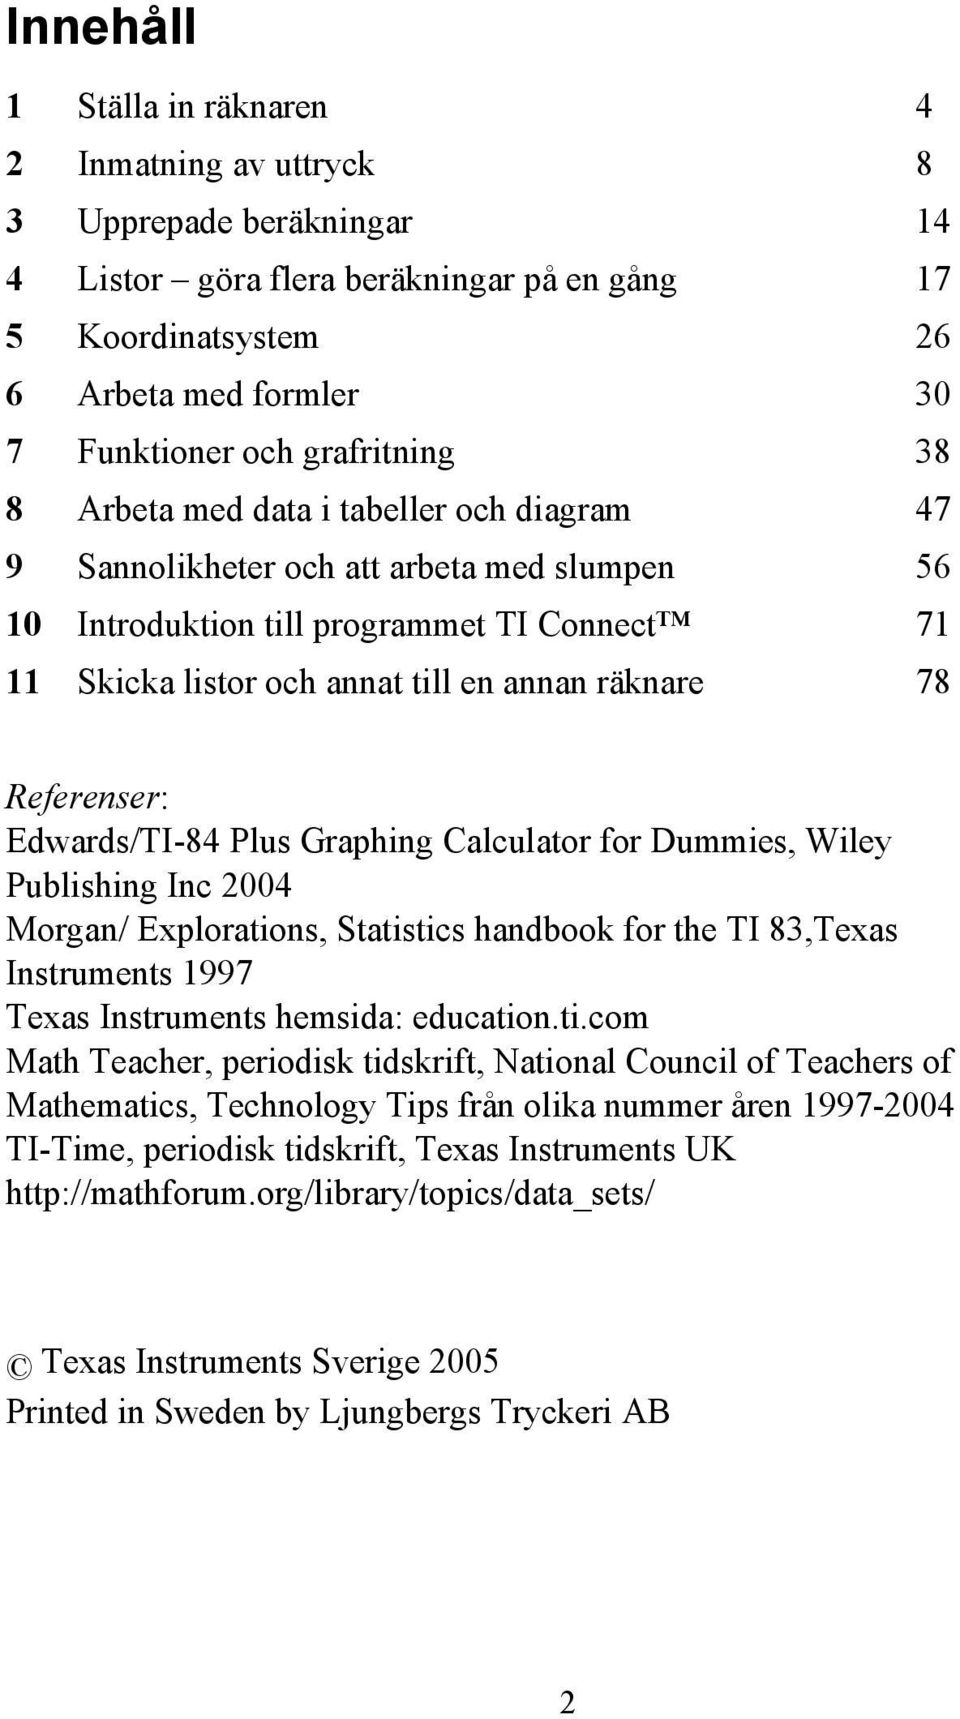 78 Referenser: Edwards/TI-84 Plus Graphing Calculator for Dummies, Wiley Publishing Inc 2004 Morgan/ Explorations, Statistics handbook for the TI 83,Texas Instruments 1997 Texas Instruments hemsida: